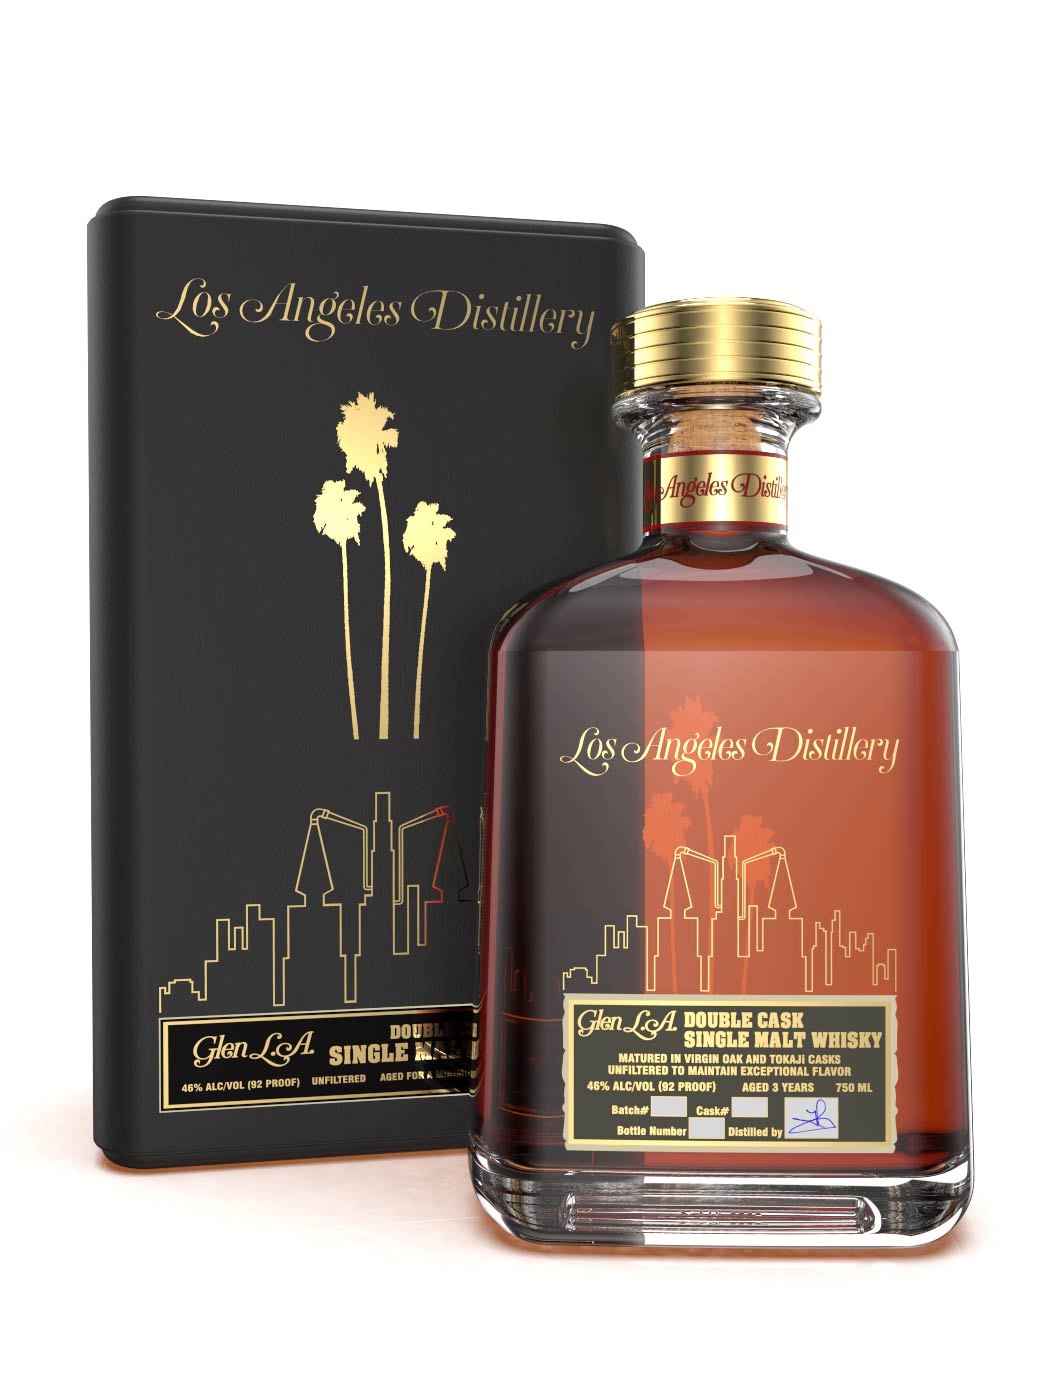 Glen LA Double Cask Single Malt Whisky Collectors Edition from Los Angeles Distillery